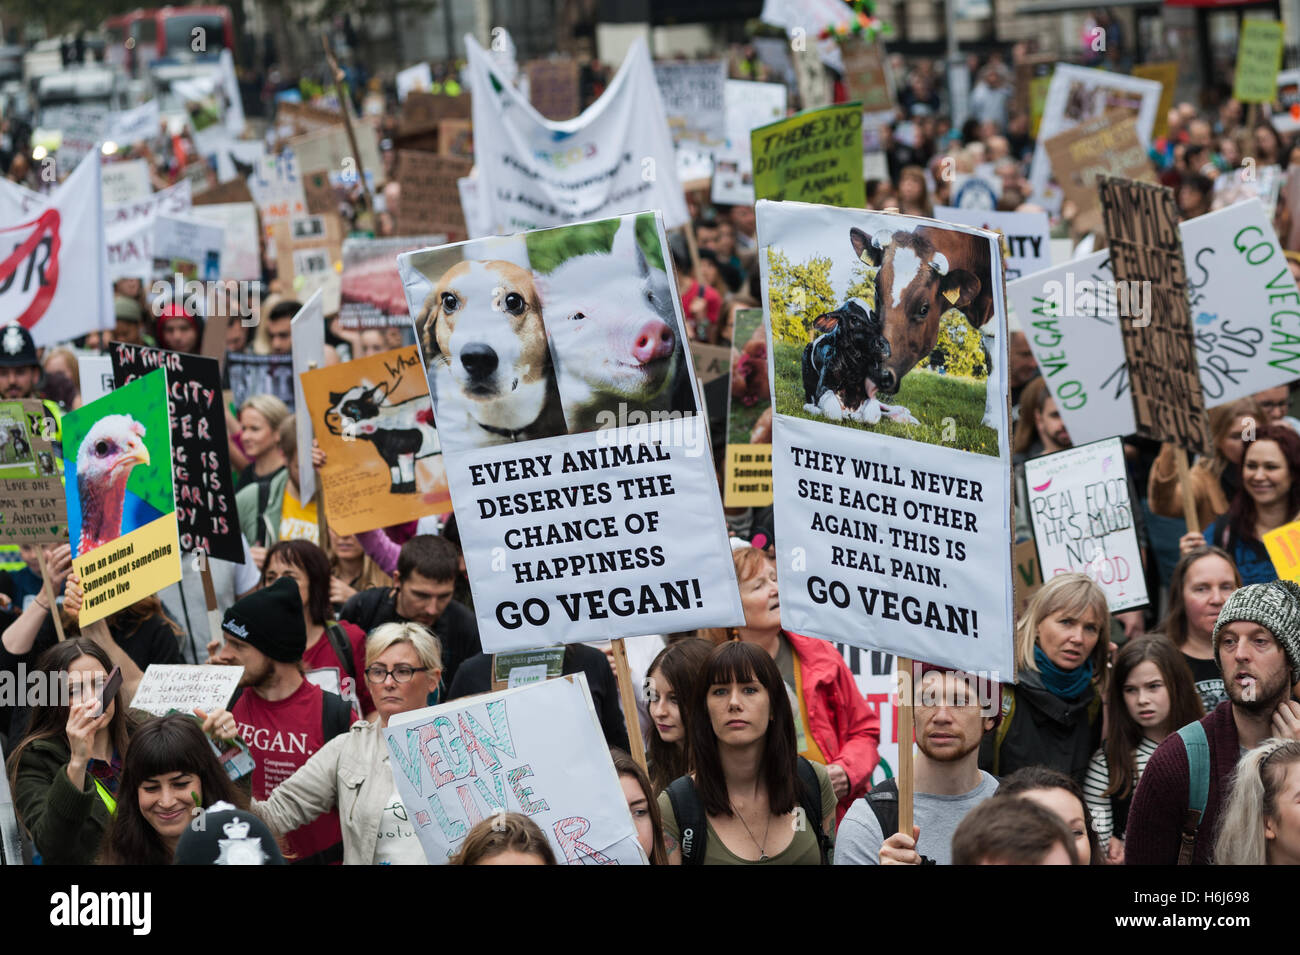 Vegan activist defies ban in 'chaotic' protest